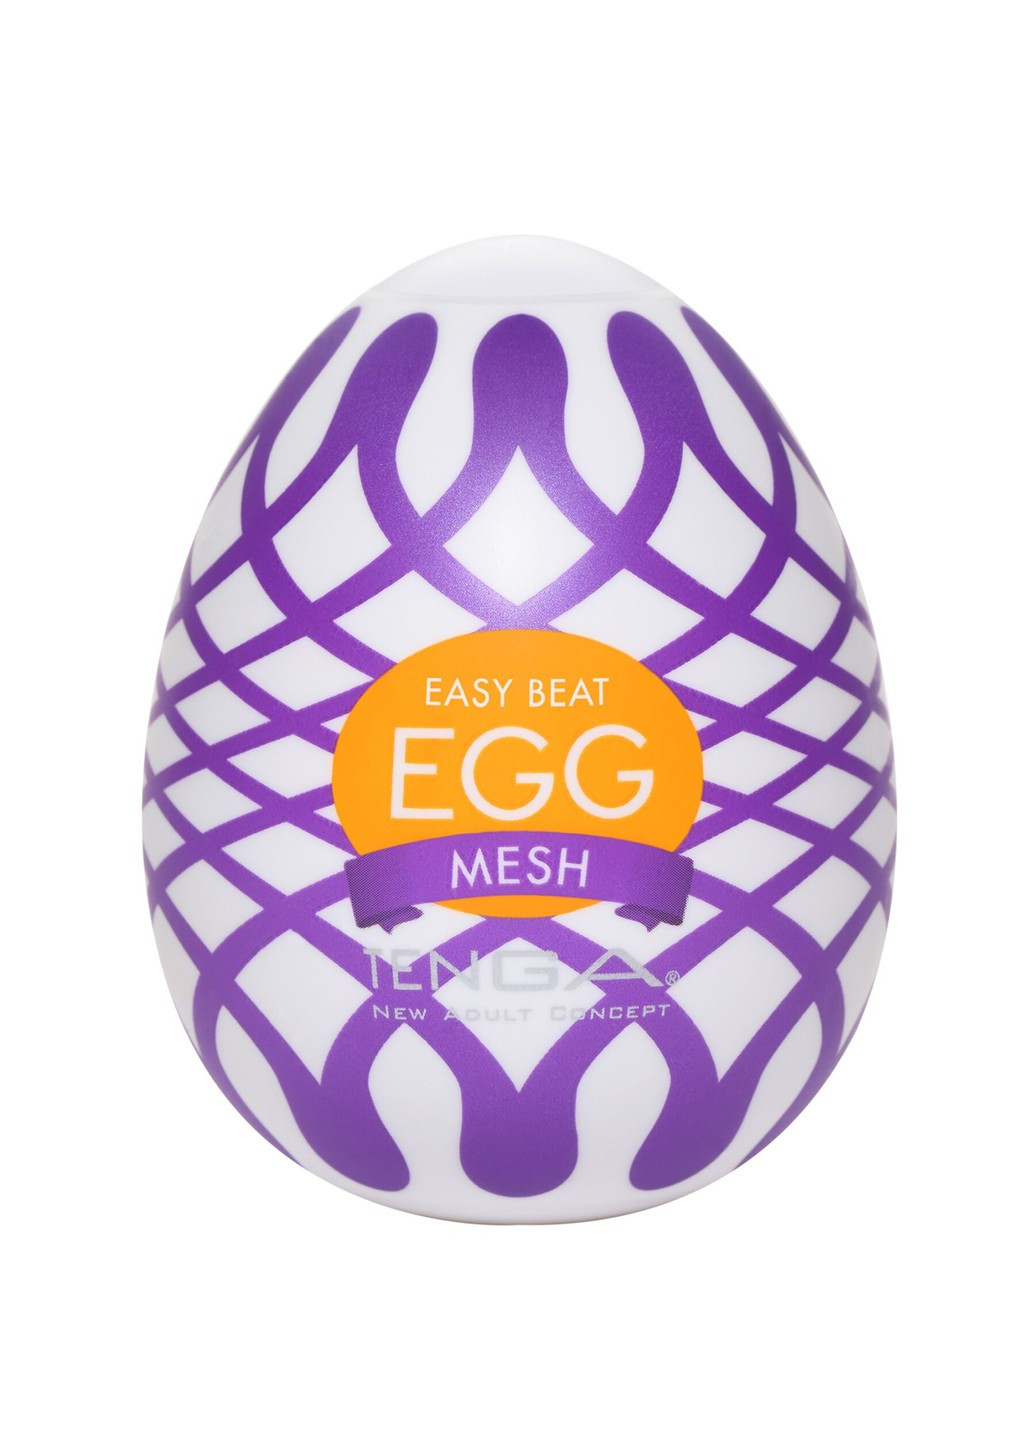 Мастурбатор яйцо Egg Mesh Tenga (252607111)